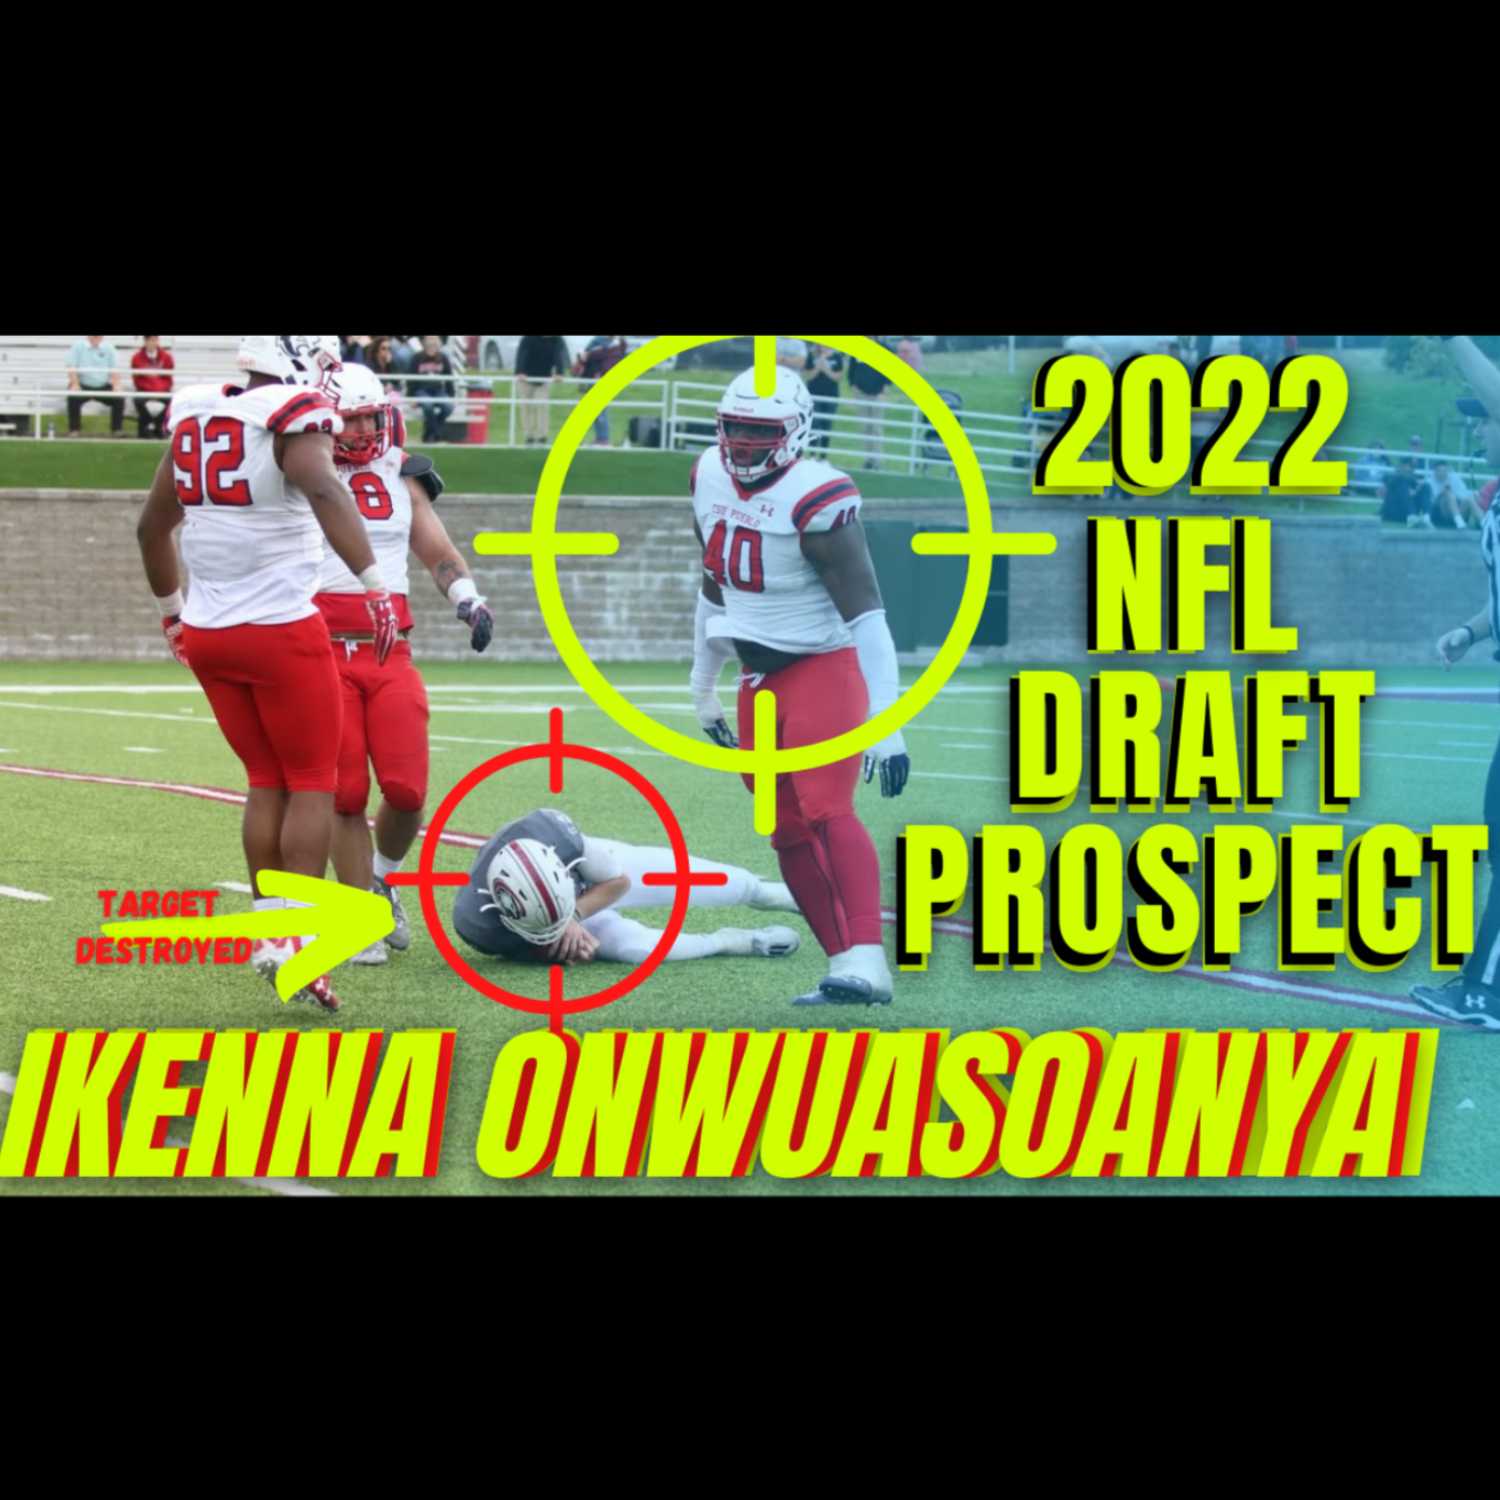 2022 NFL Draft prospect IKENNA ONWUASOANYA “I am the new Nigerian nightmare”